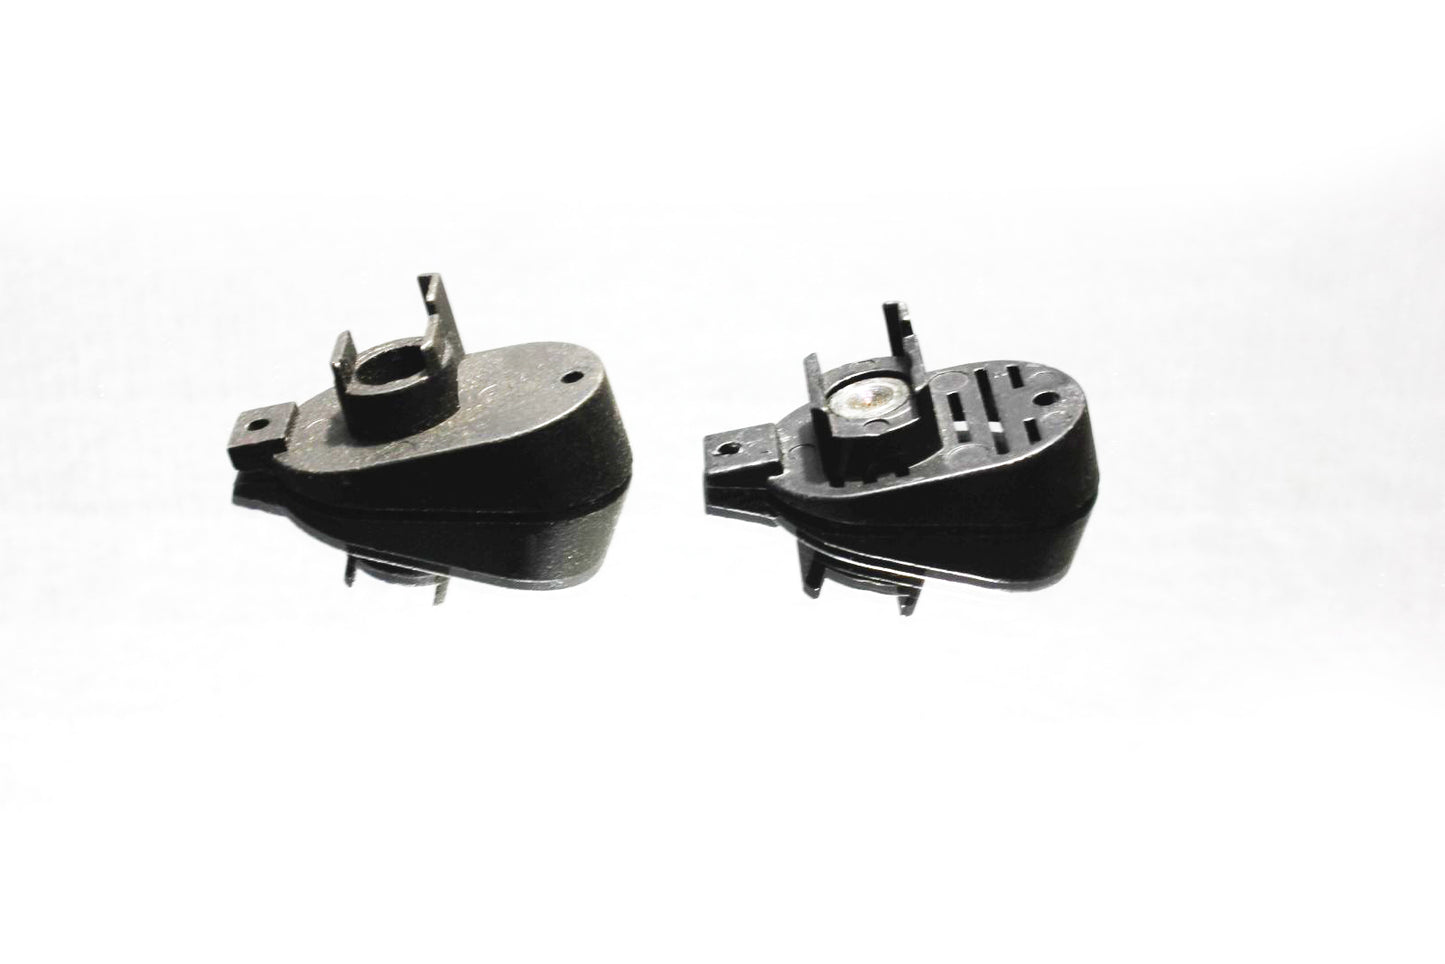 Premium Set of 2x Full Metal AEG Version 2 Heat Sink Motor Plate Replacements w/ Adjustable Height Screw